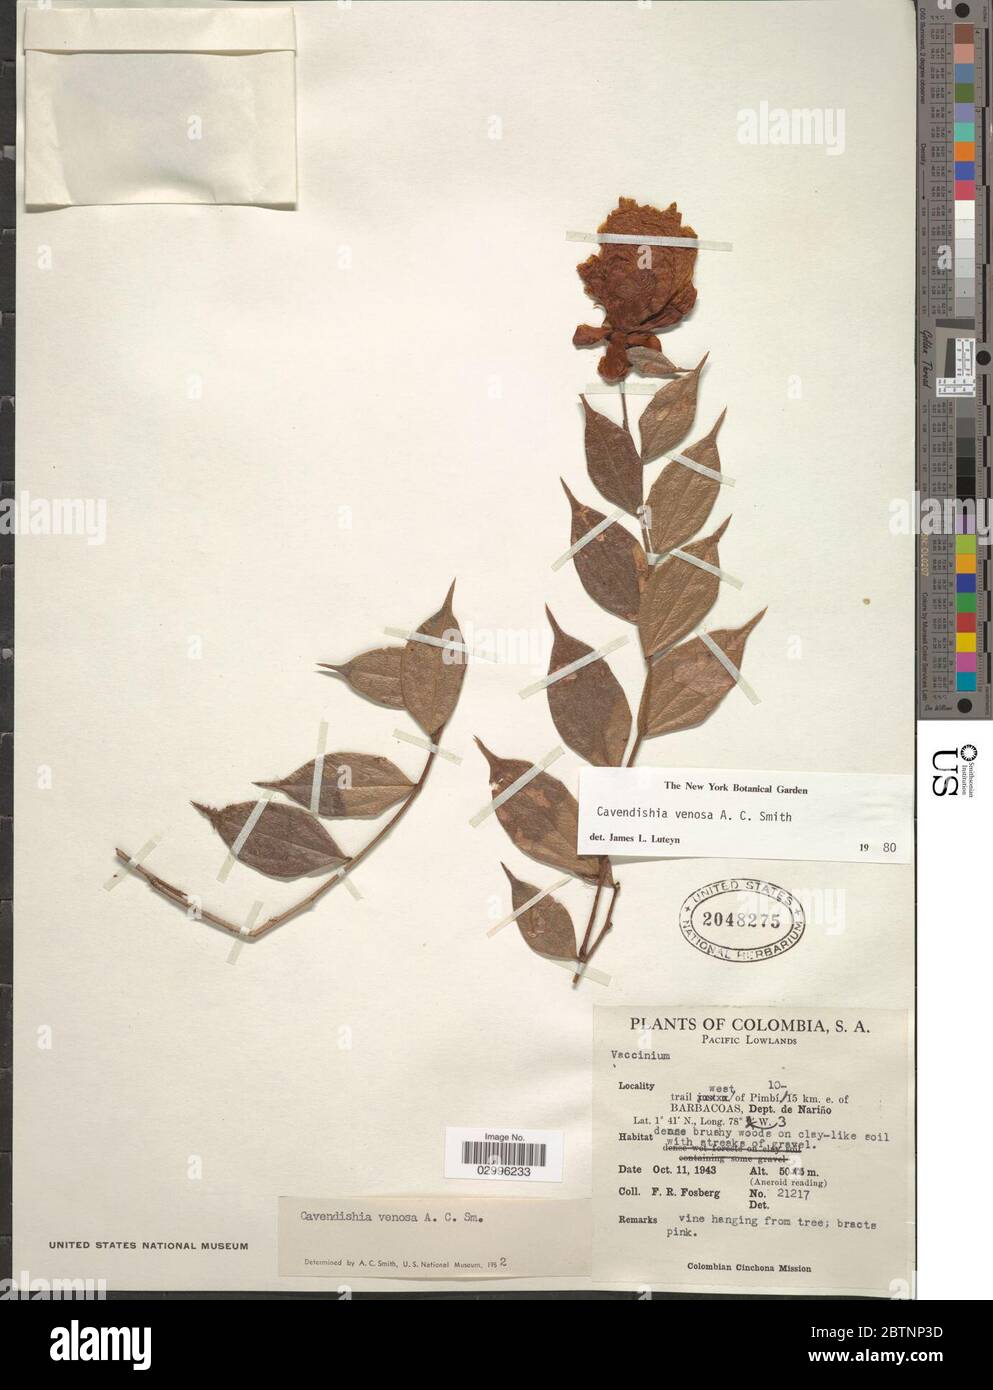 Cavendishia venosa AC Sm. Stock Photo